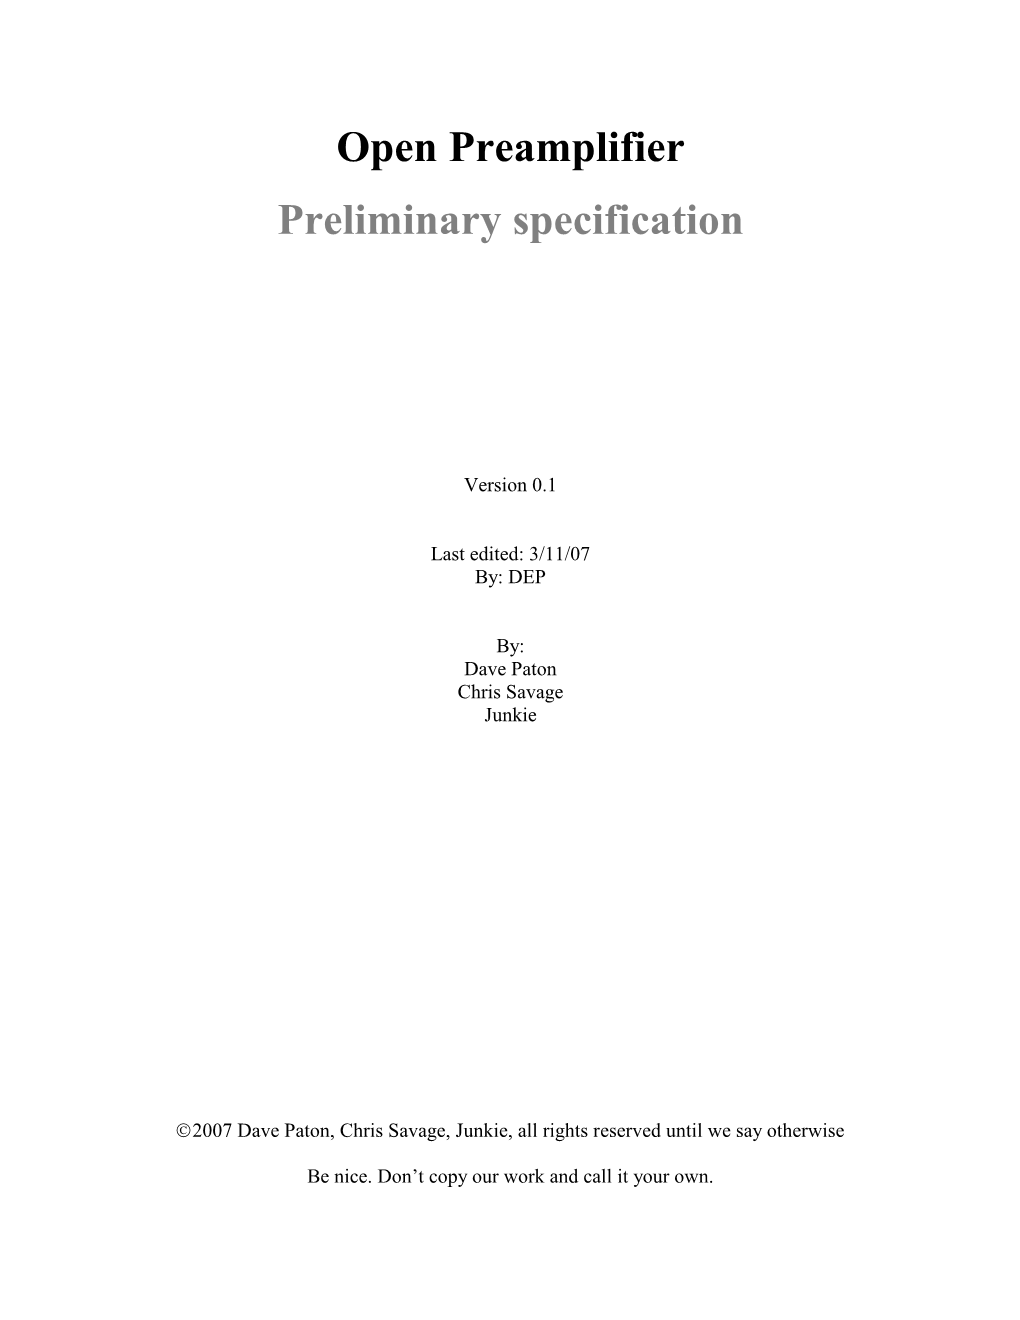 Open Preamplifier Preliminary Specification